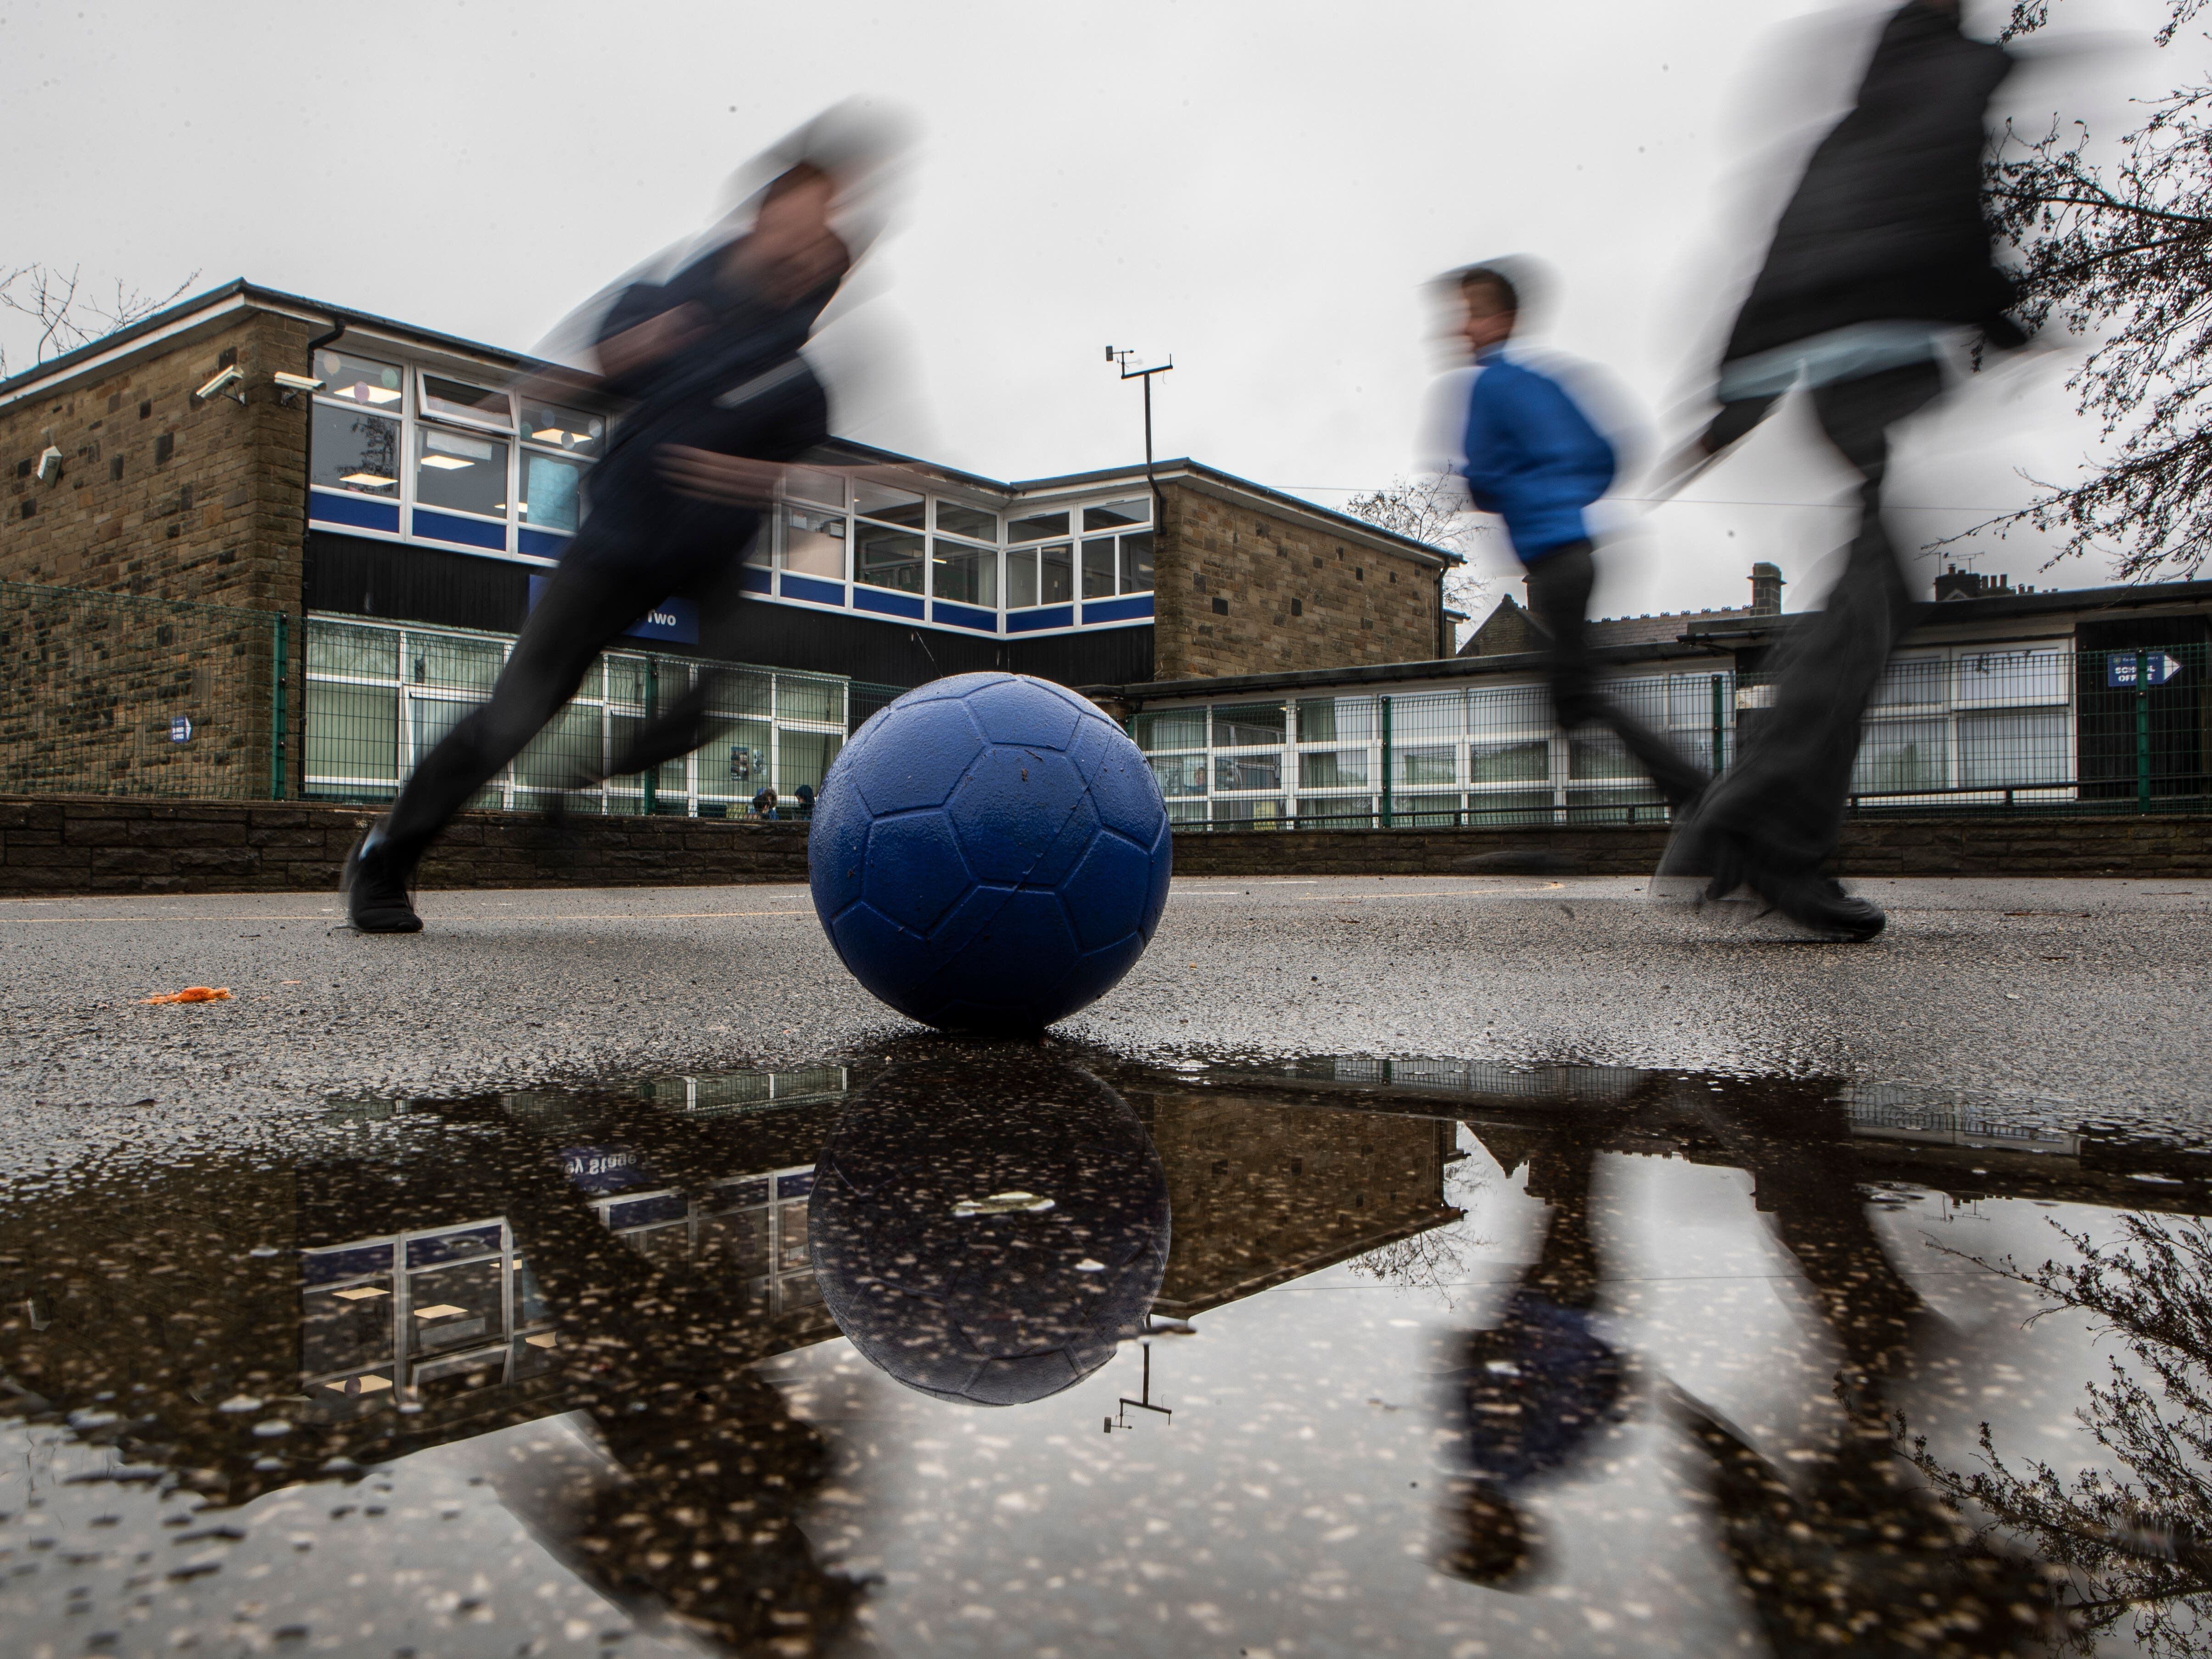 School suspensions hit record high last autumn term, study says